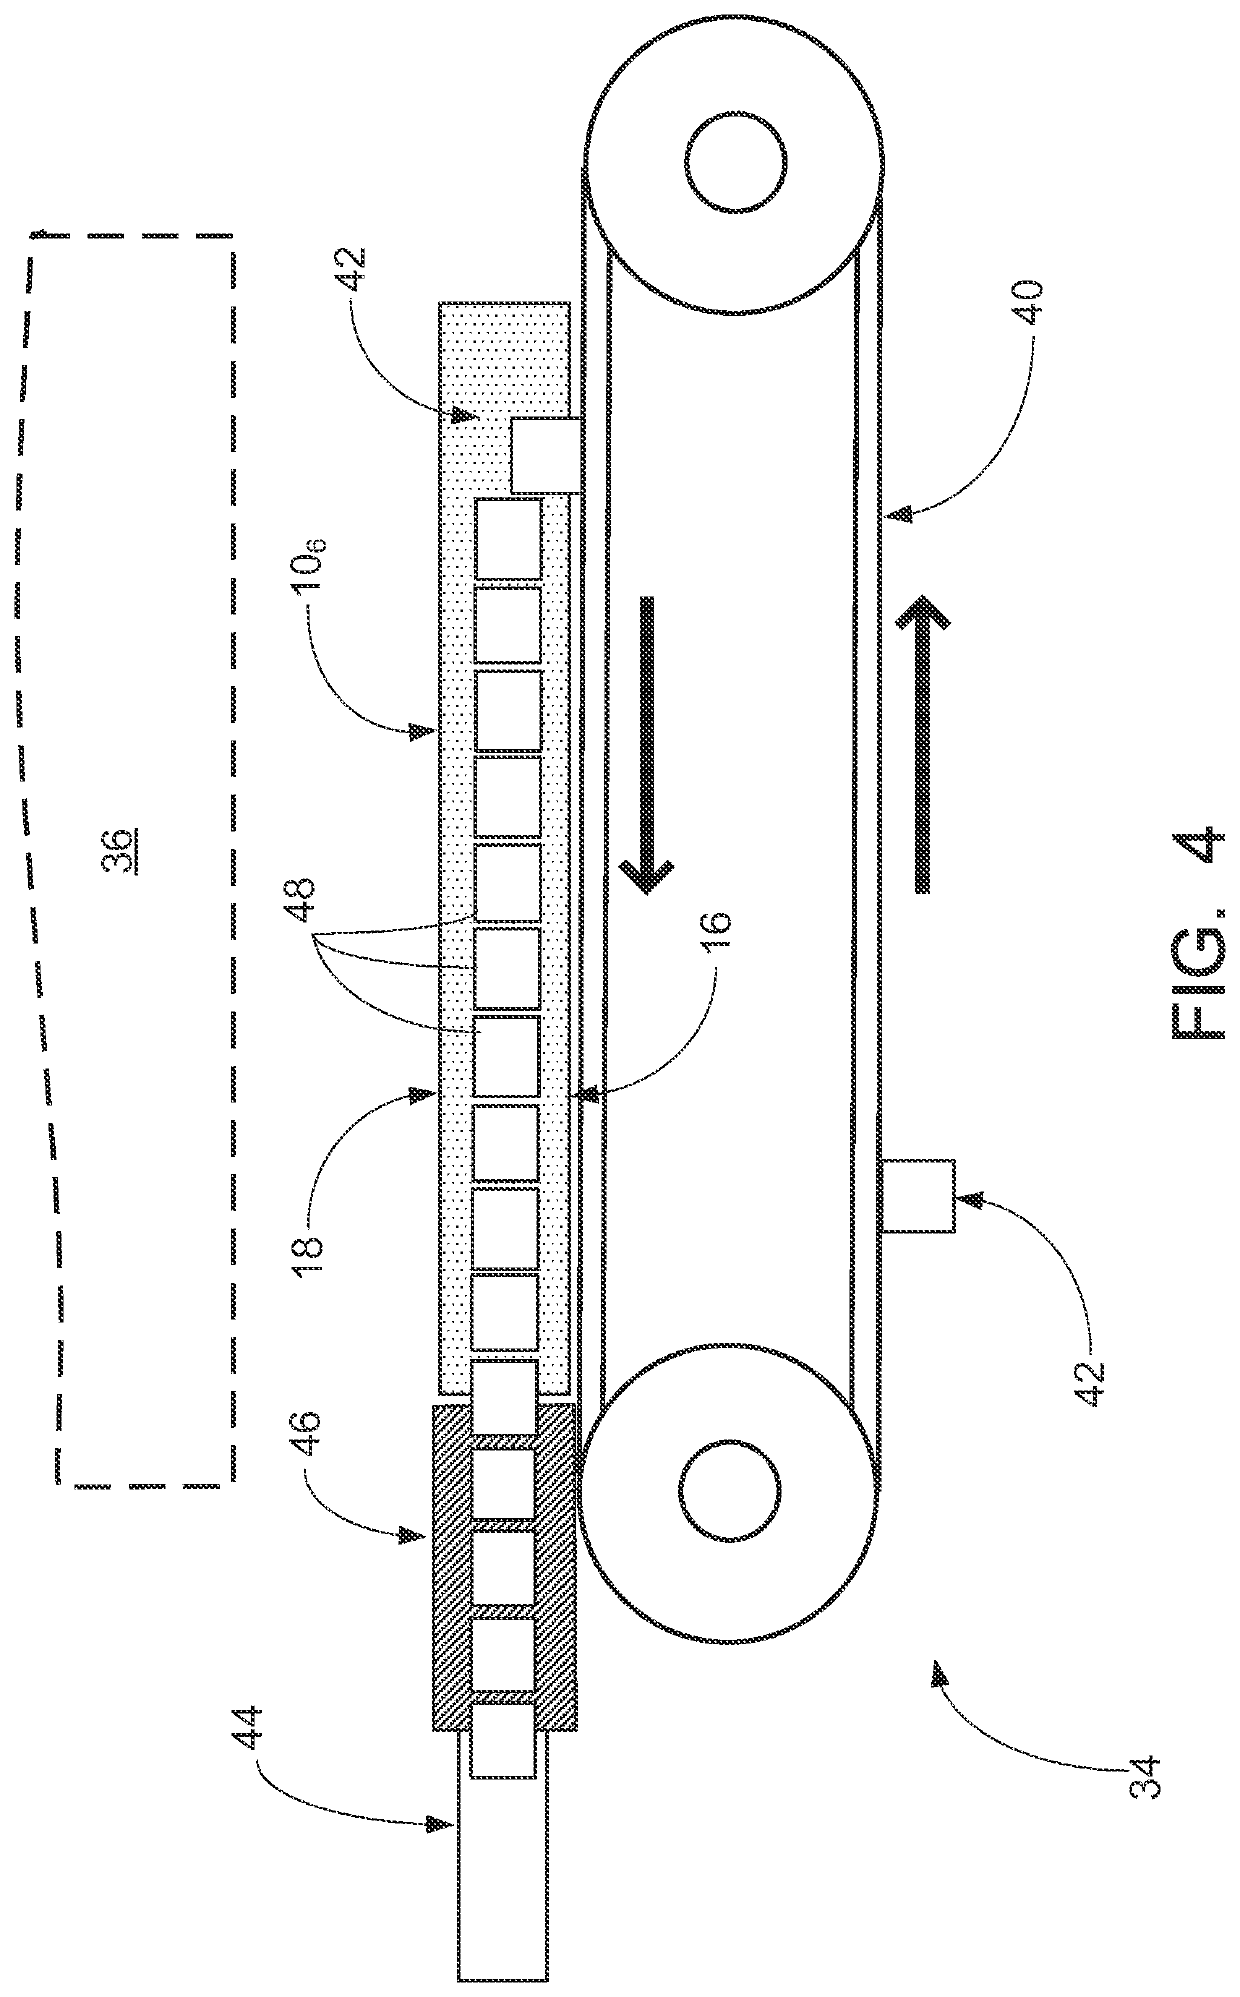 Pellet handling apparatus and fuel rod loading method